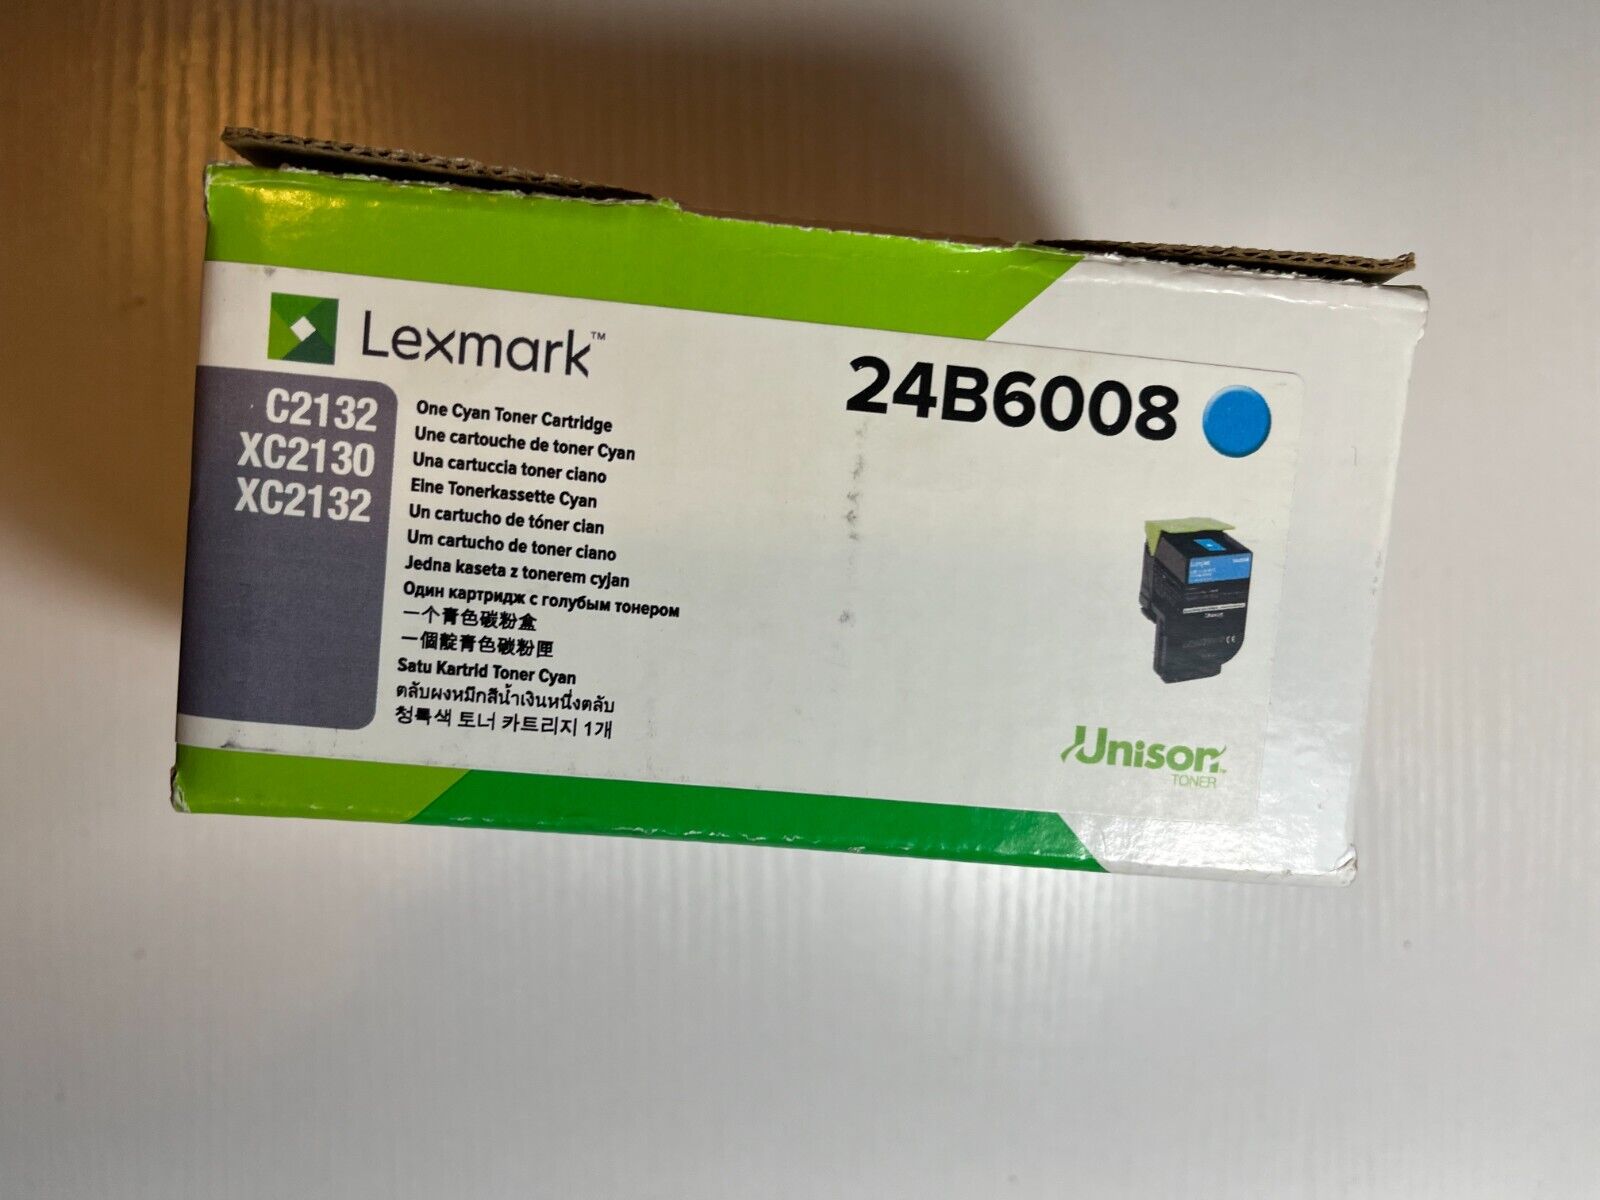 Lexmark 24B6008 C2132 XC2130 XC2132 Toner Cartridge, Cyan